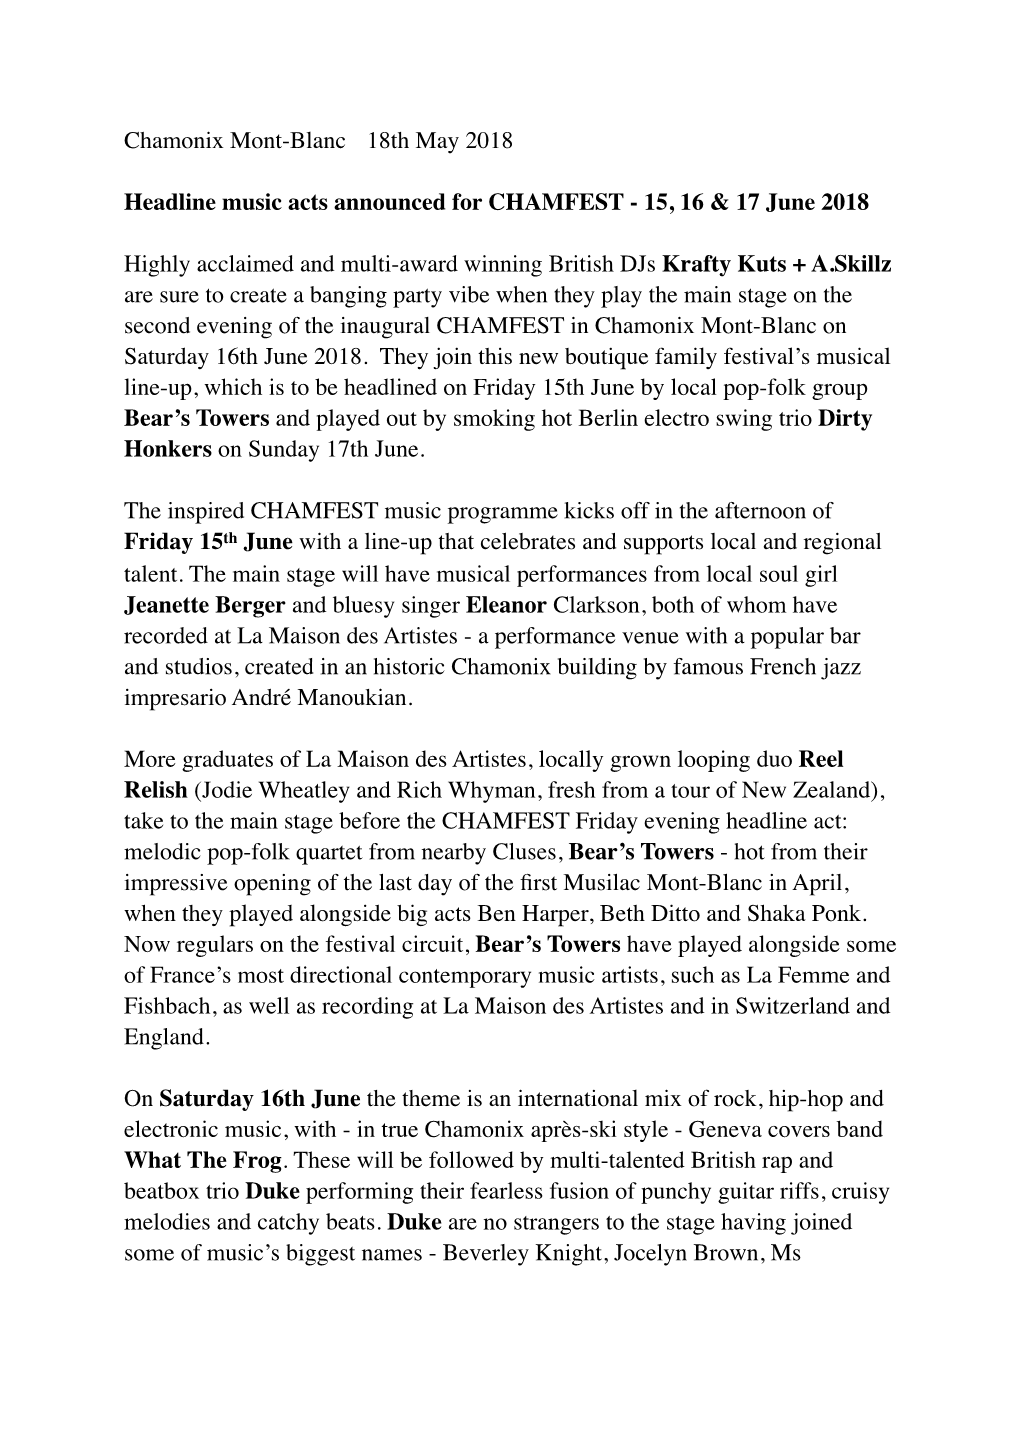 CHAM FEST Music Press Release